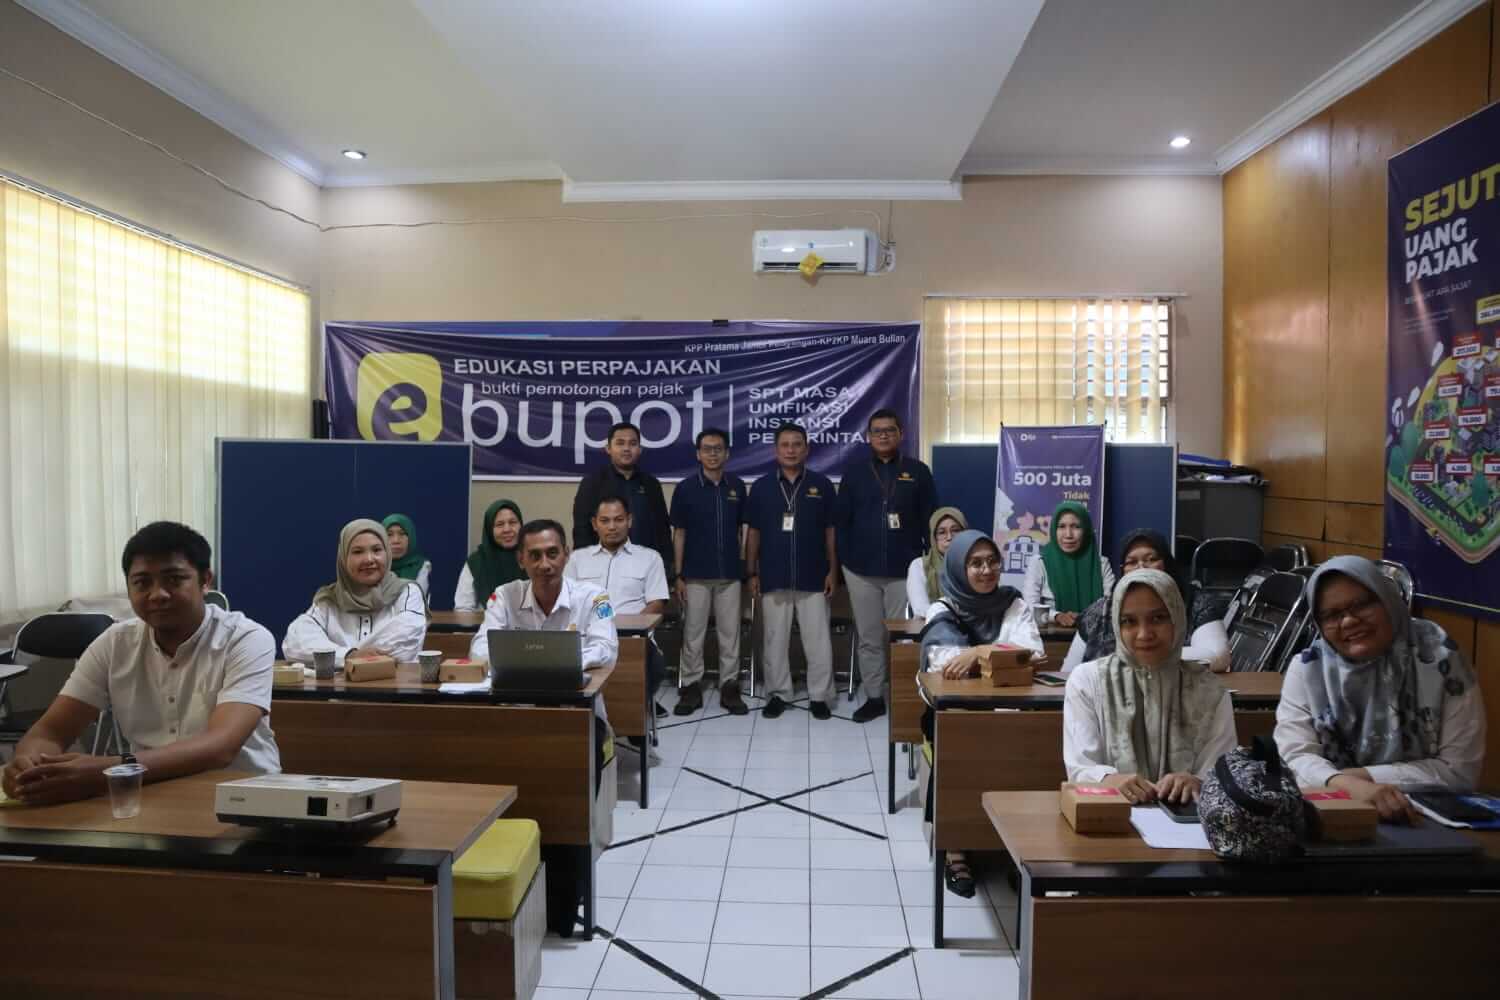 KP2KP Muara Bulian Bersama KPP Pratama Jambi Pelayangan Gelar Edukasi Perpajakan e-Bupot Unifikasi Pemerintah